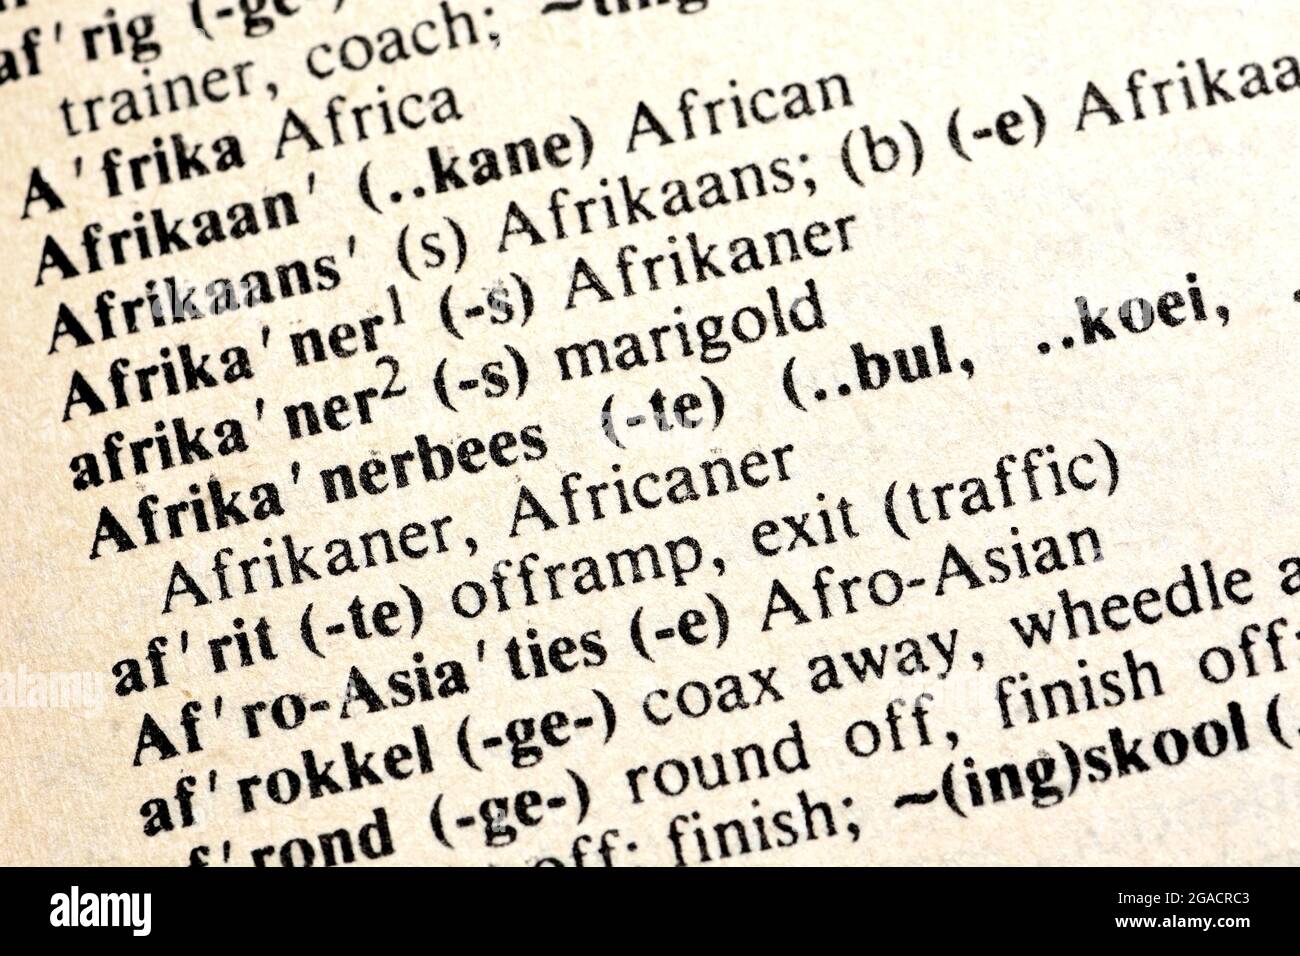 Afikaans / Afrikaner traducido en un diccionario Afrikaans-Inglés Foto de stock